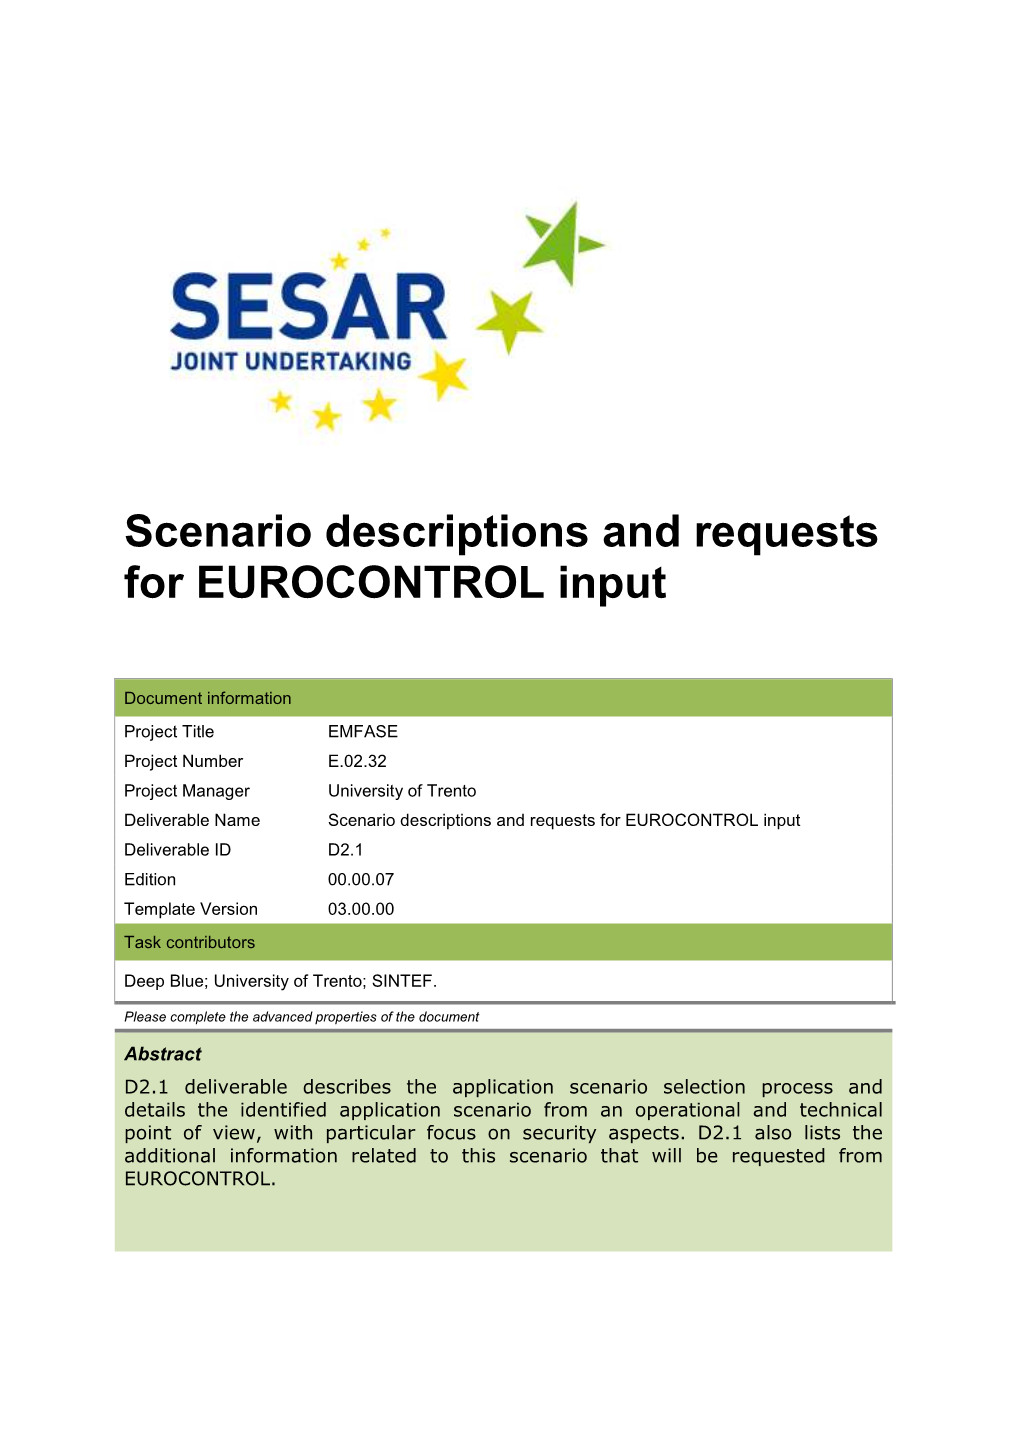 Scenario Descriptions and Requests for EUROCONTROL Input